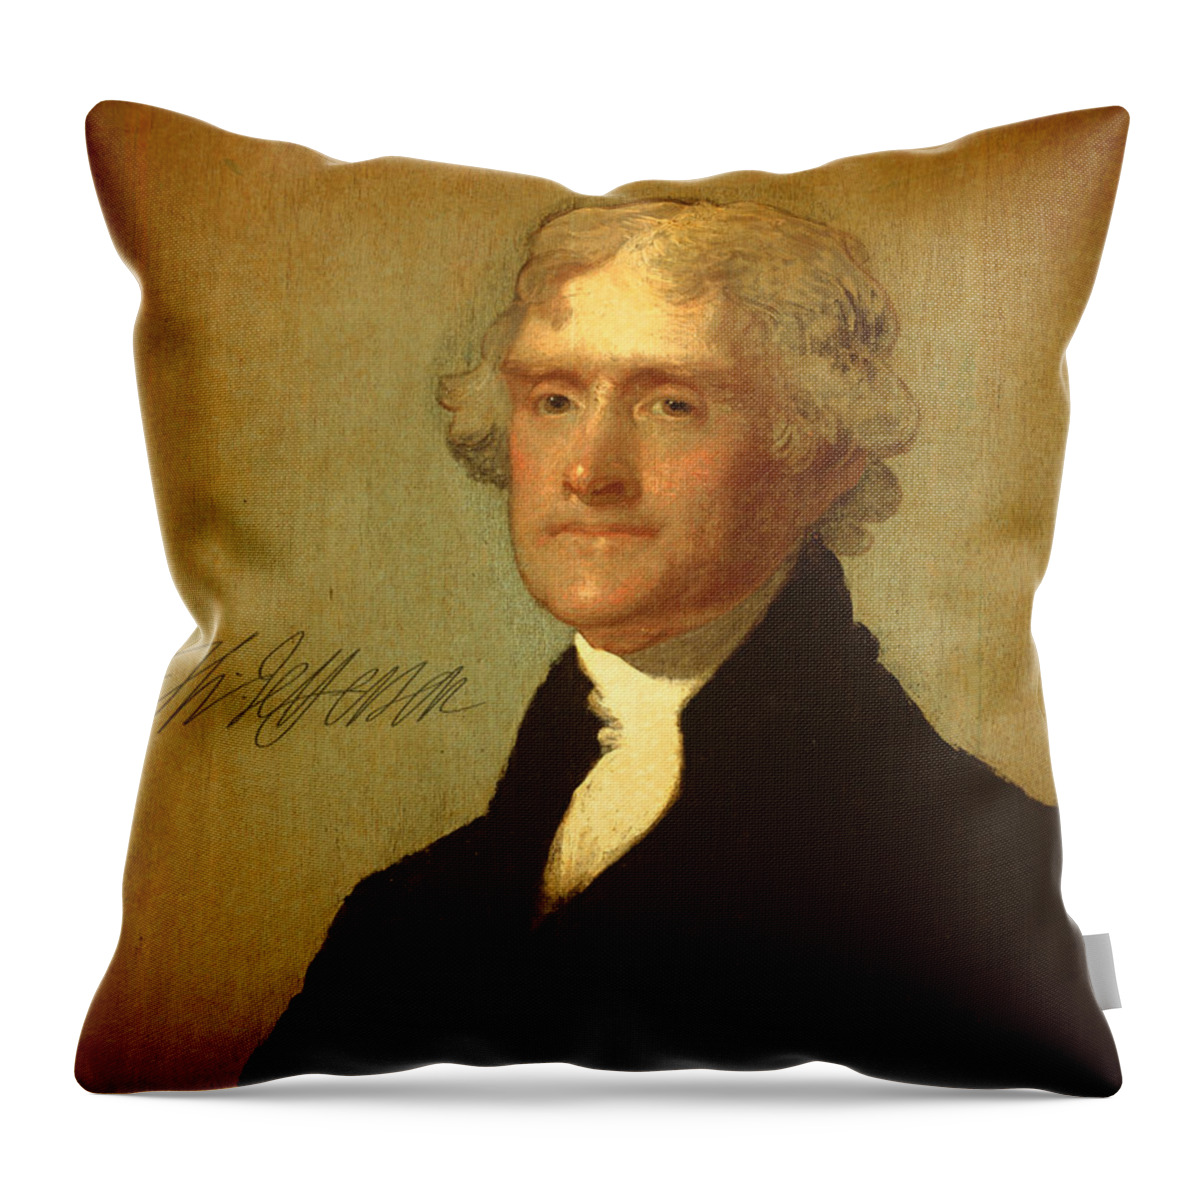 President Thomas Jefferson Portrait Signature Throw Pillow featuring the mixed media President Thomas Jefferson Portrait and Signature by Design Turnpike